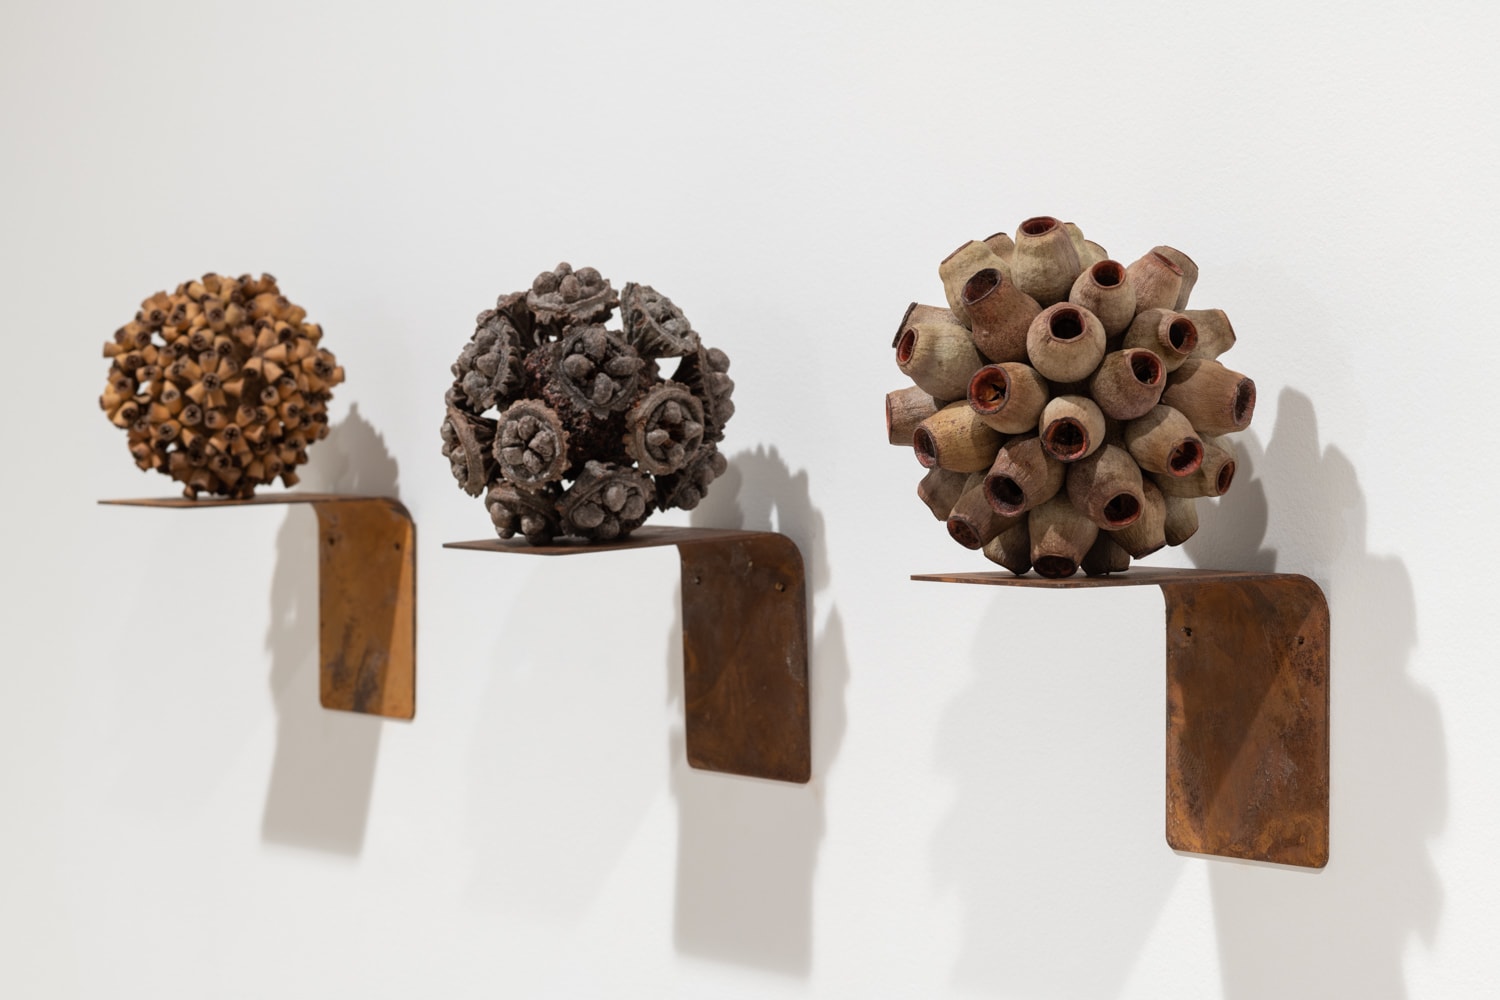 Maria Fernanda Cardoso, Installation view Gumnuts and Sandstone, 2021, Gumnut spheres on artist made shelves. Images courtesy the artist and Sullivan+Strumpf